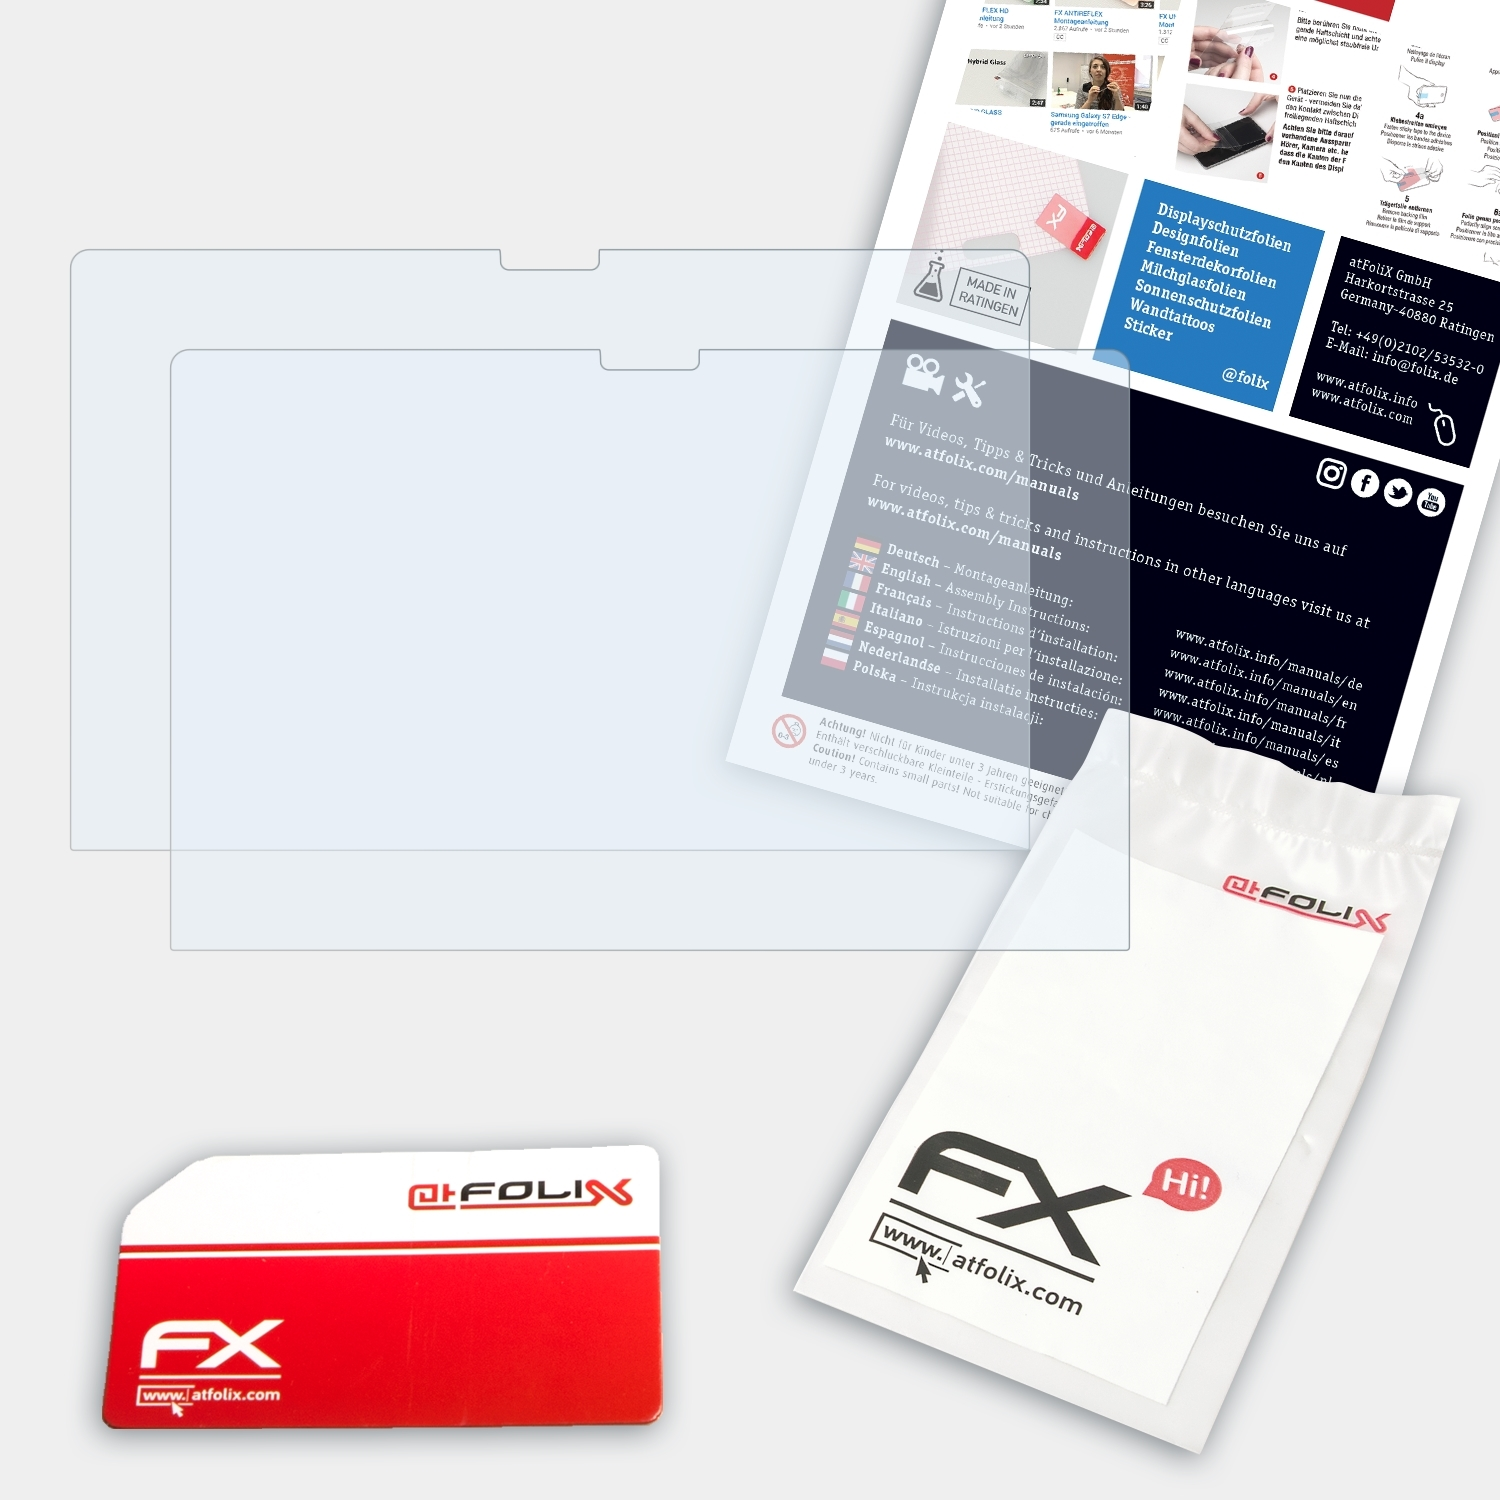 ATFOLIX 2x FX-Clear Displayschutz(für Fujitsu Lifebook T936)